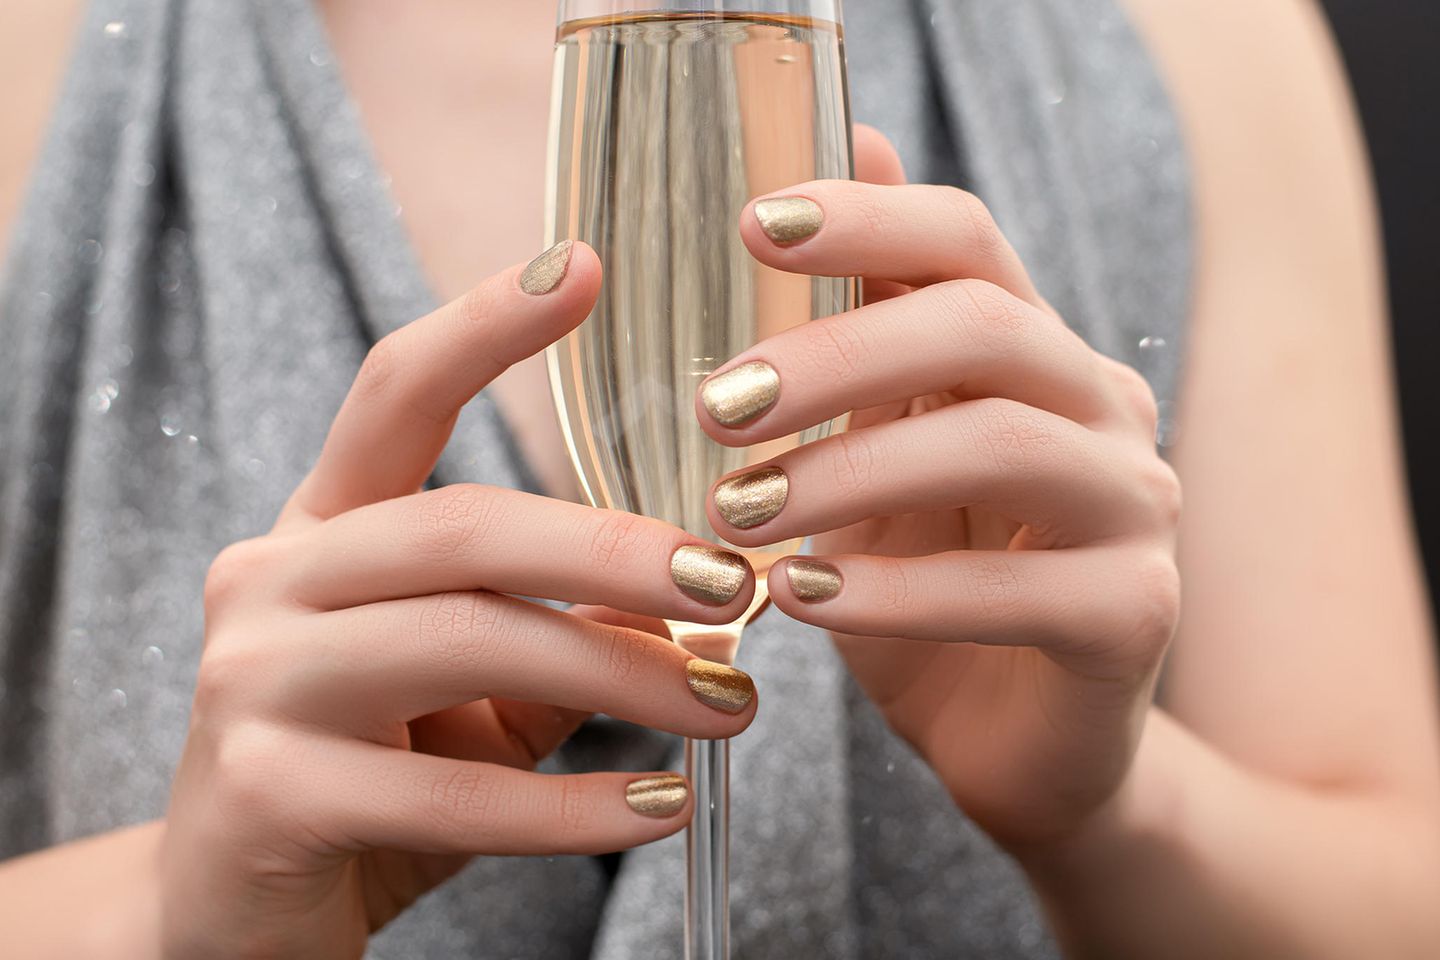 Silvester-Nägel: Frau mit goldenem Nagellack hält ein Glas Sekt in den Händen